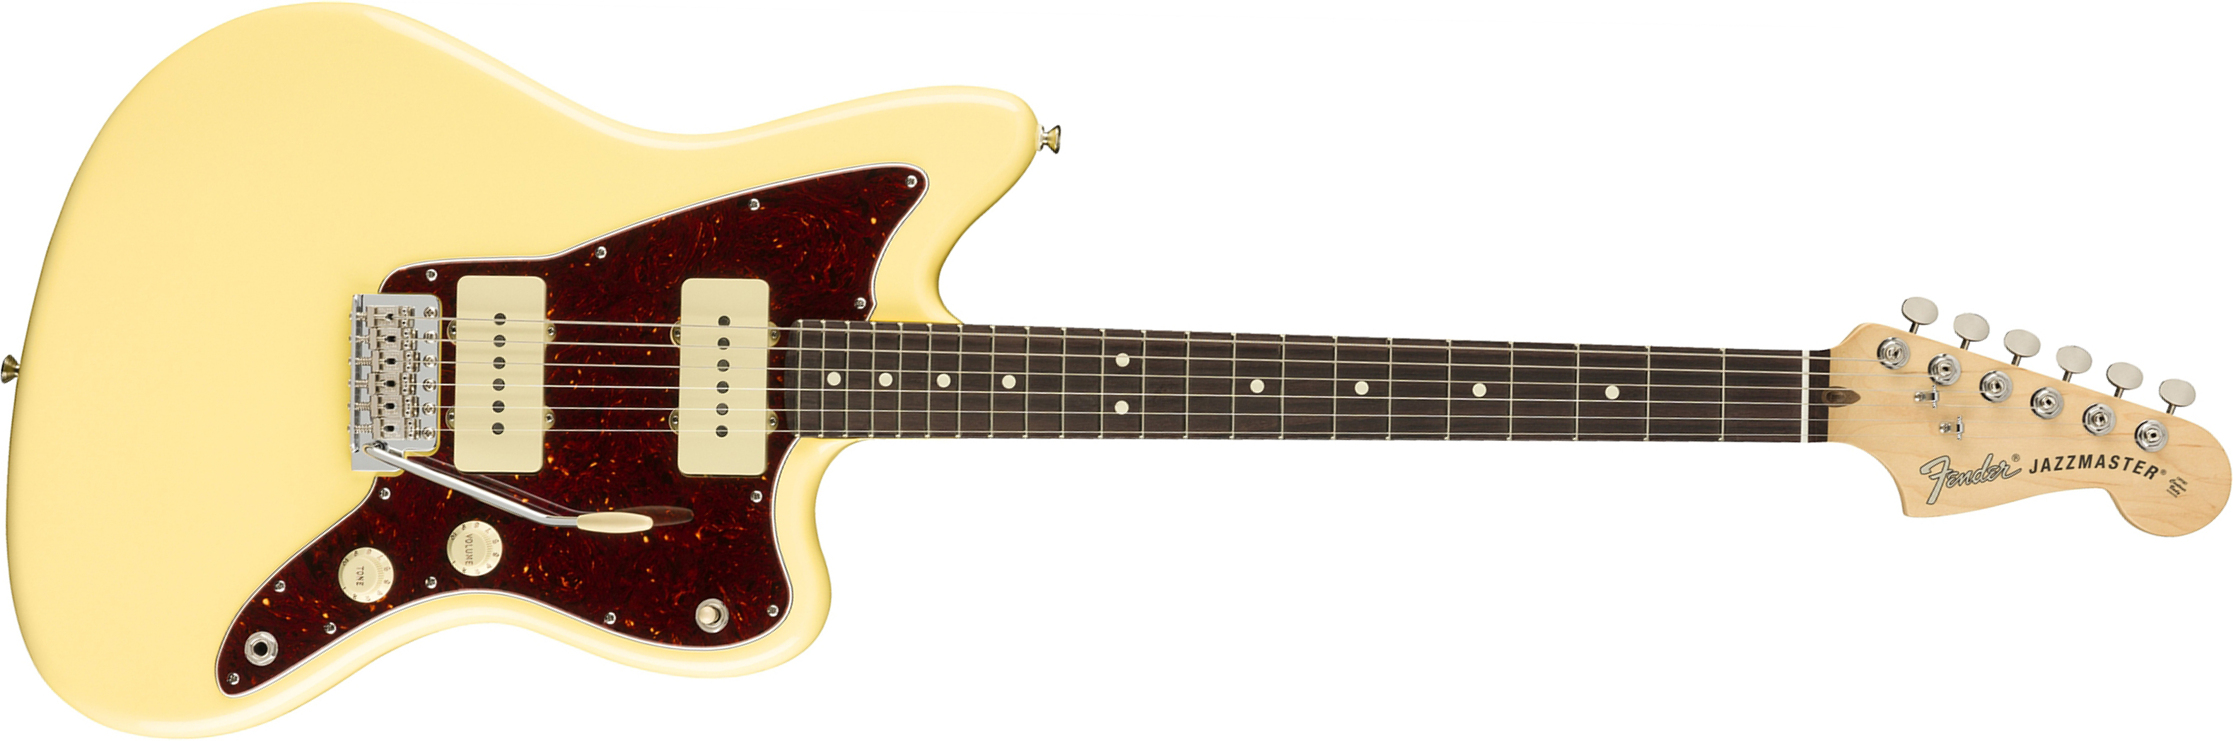 Fender Jazzmaster American Performer Usa Ss Rw - Vintage White - Guitare Électrique Double Cut - Main picture